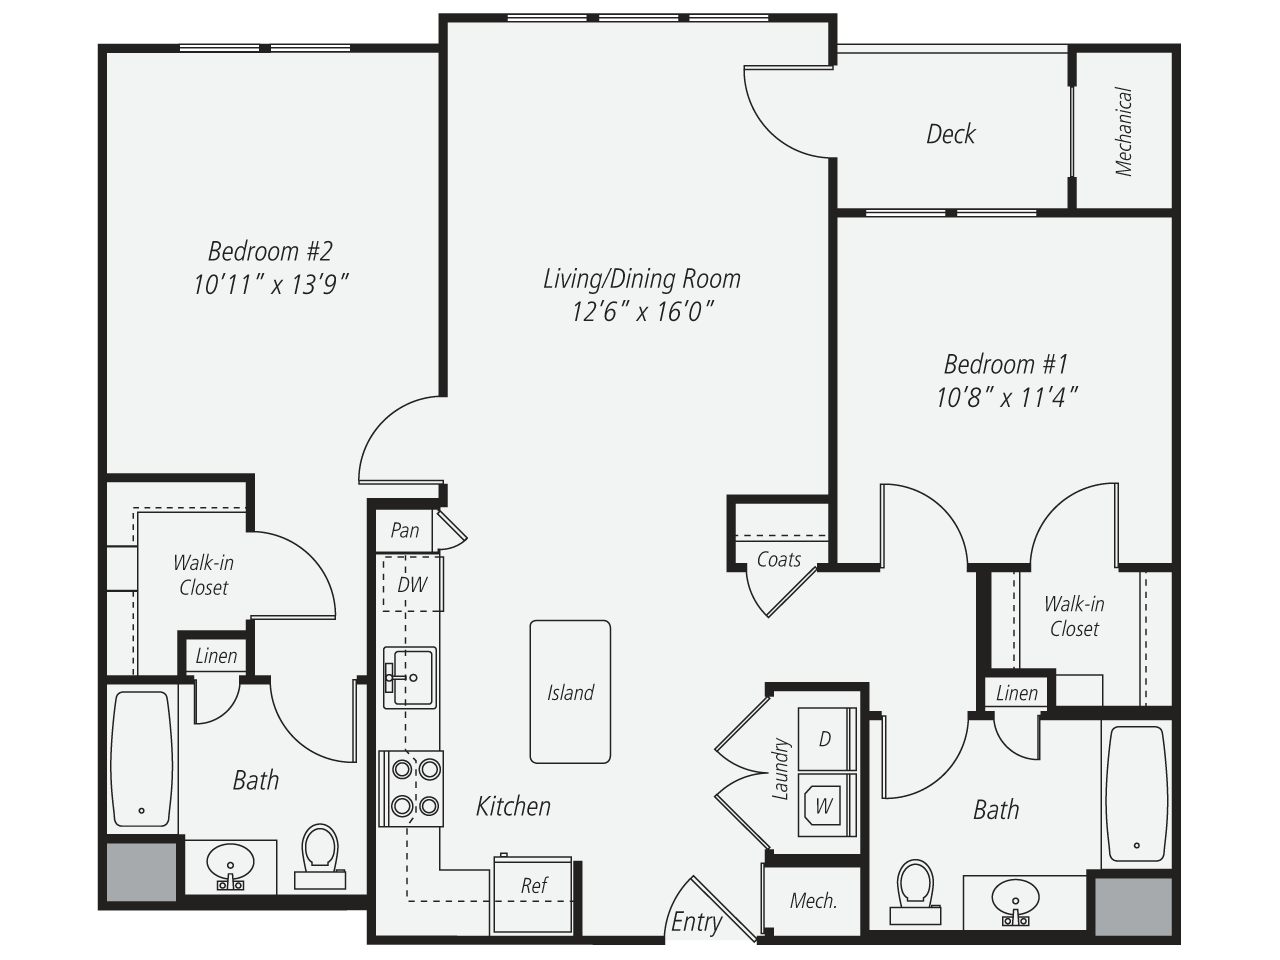 Floorplan for Apartment #245, 2 bedroom unit at Halstead Norwalk